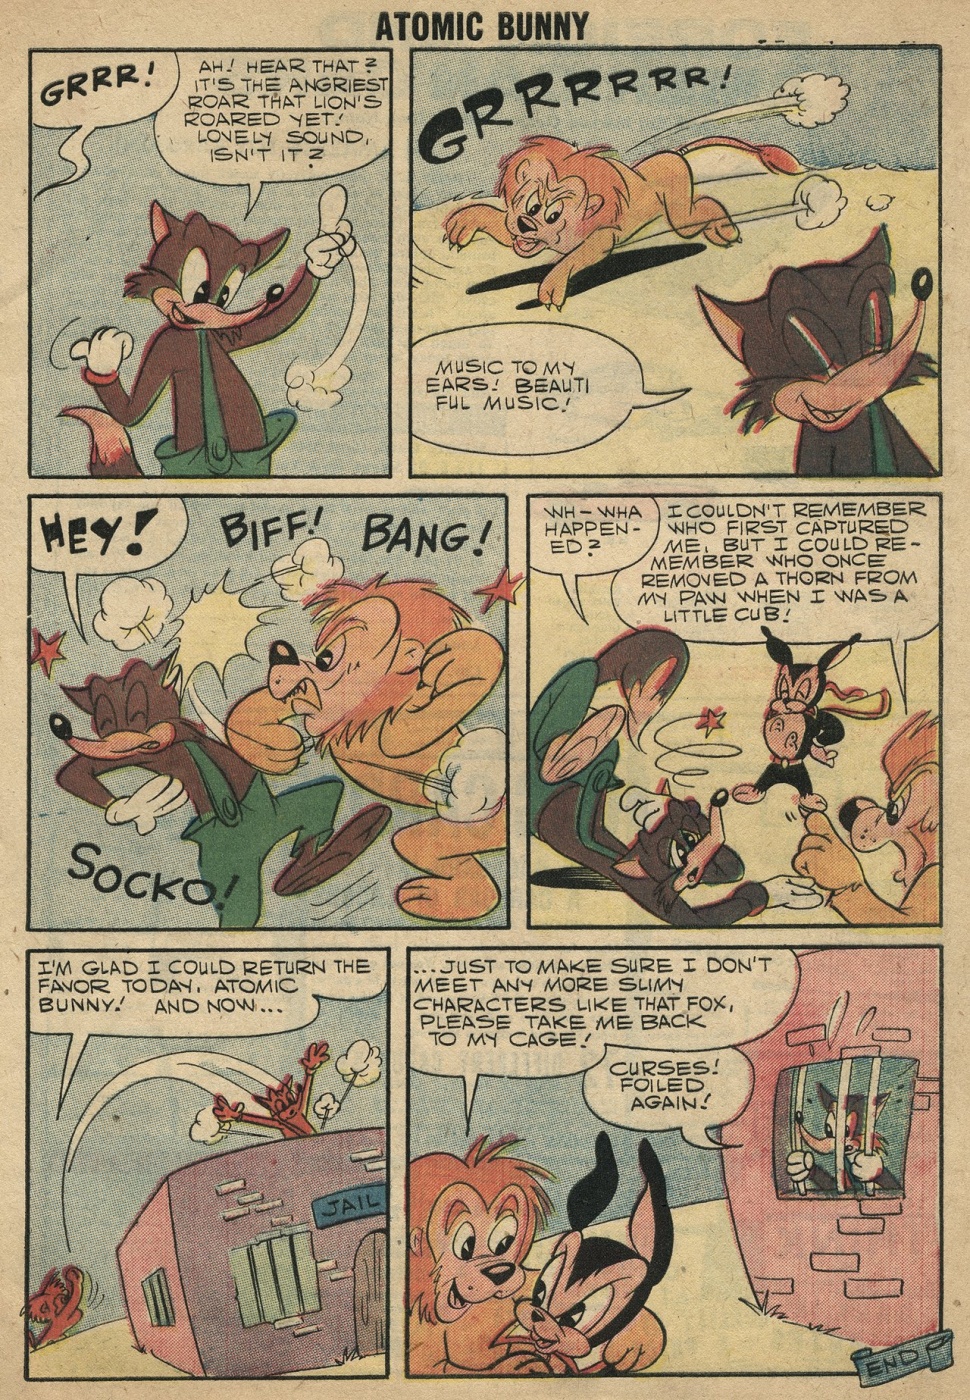 Atomic-Bunny-Comic-Strips (33)